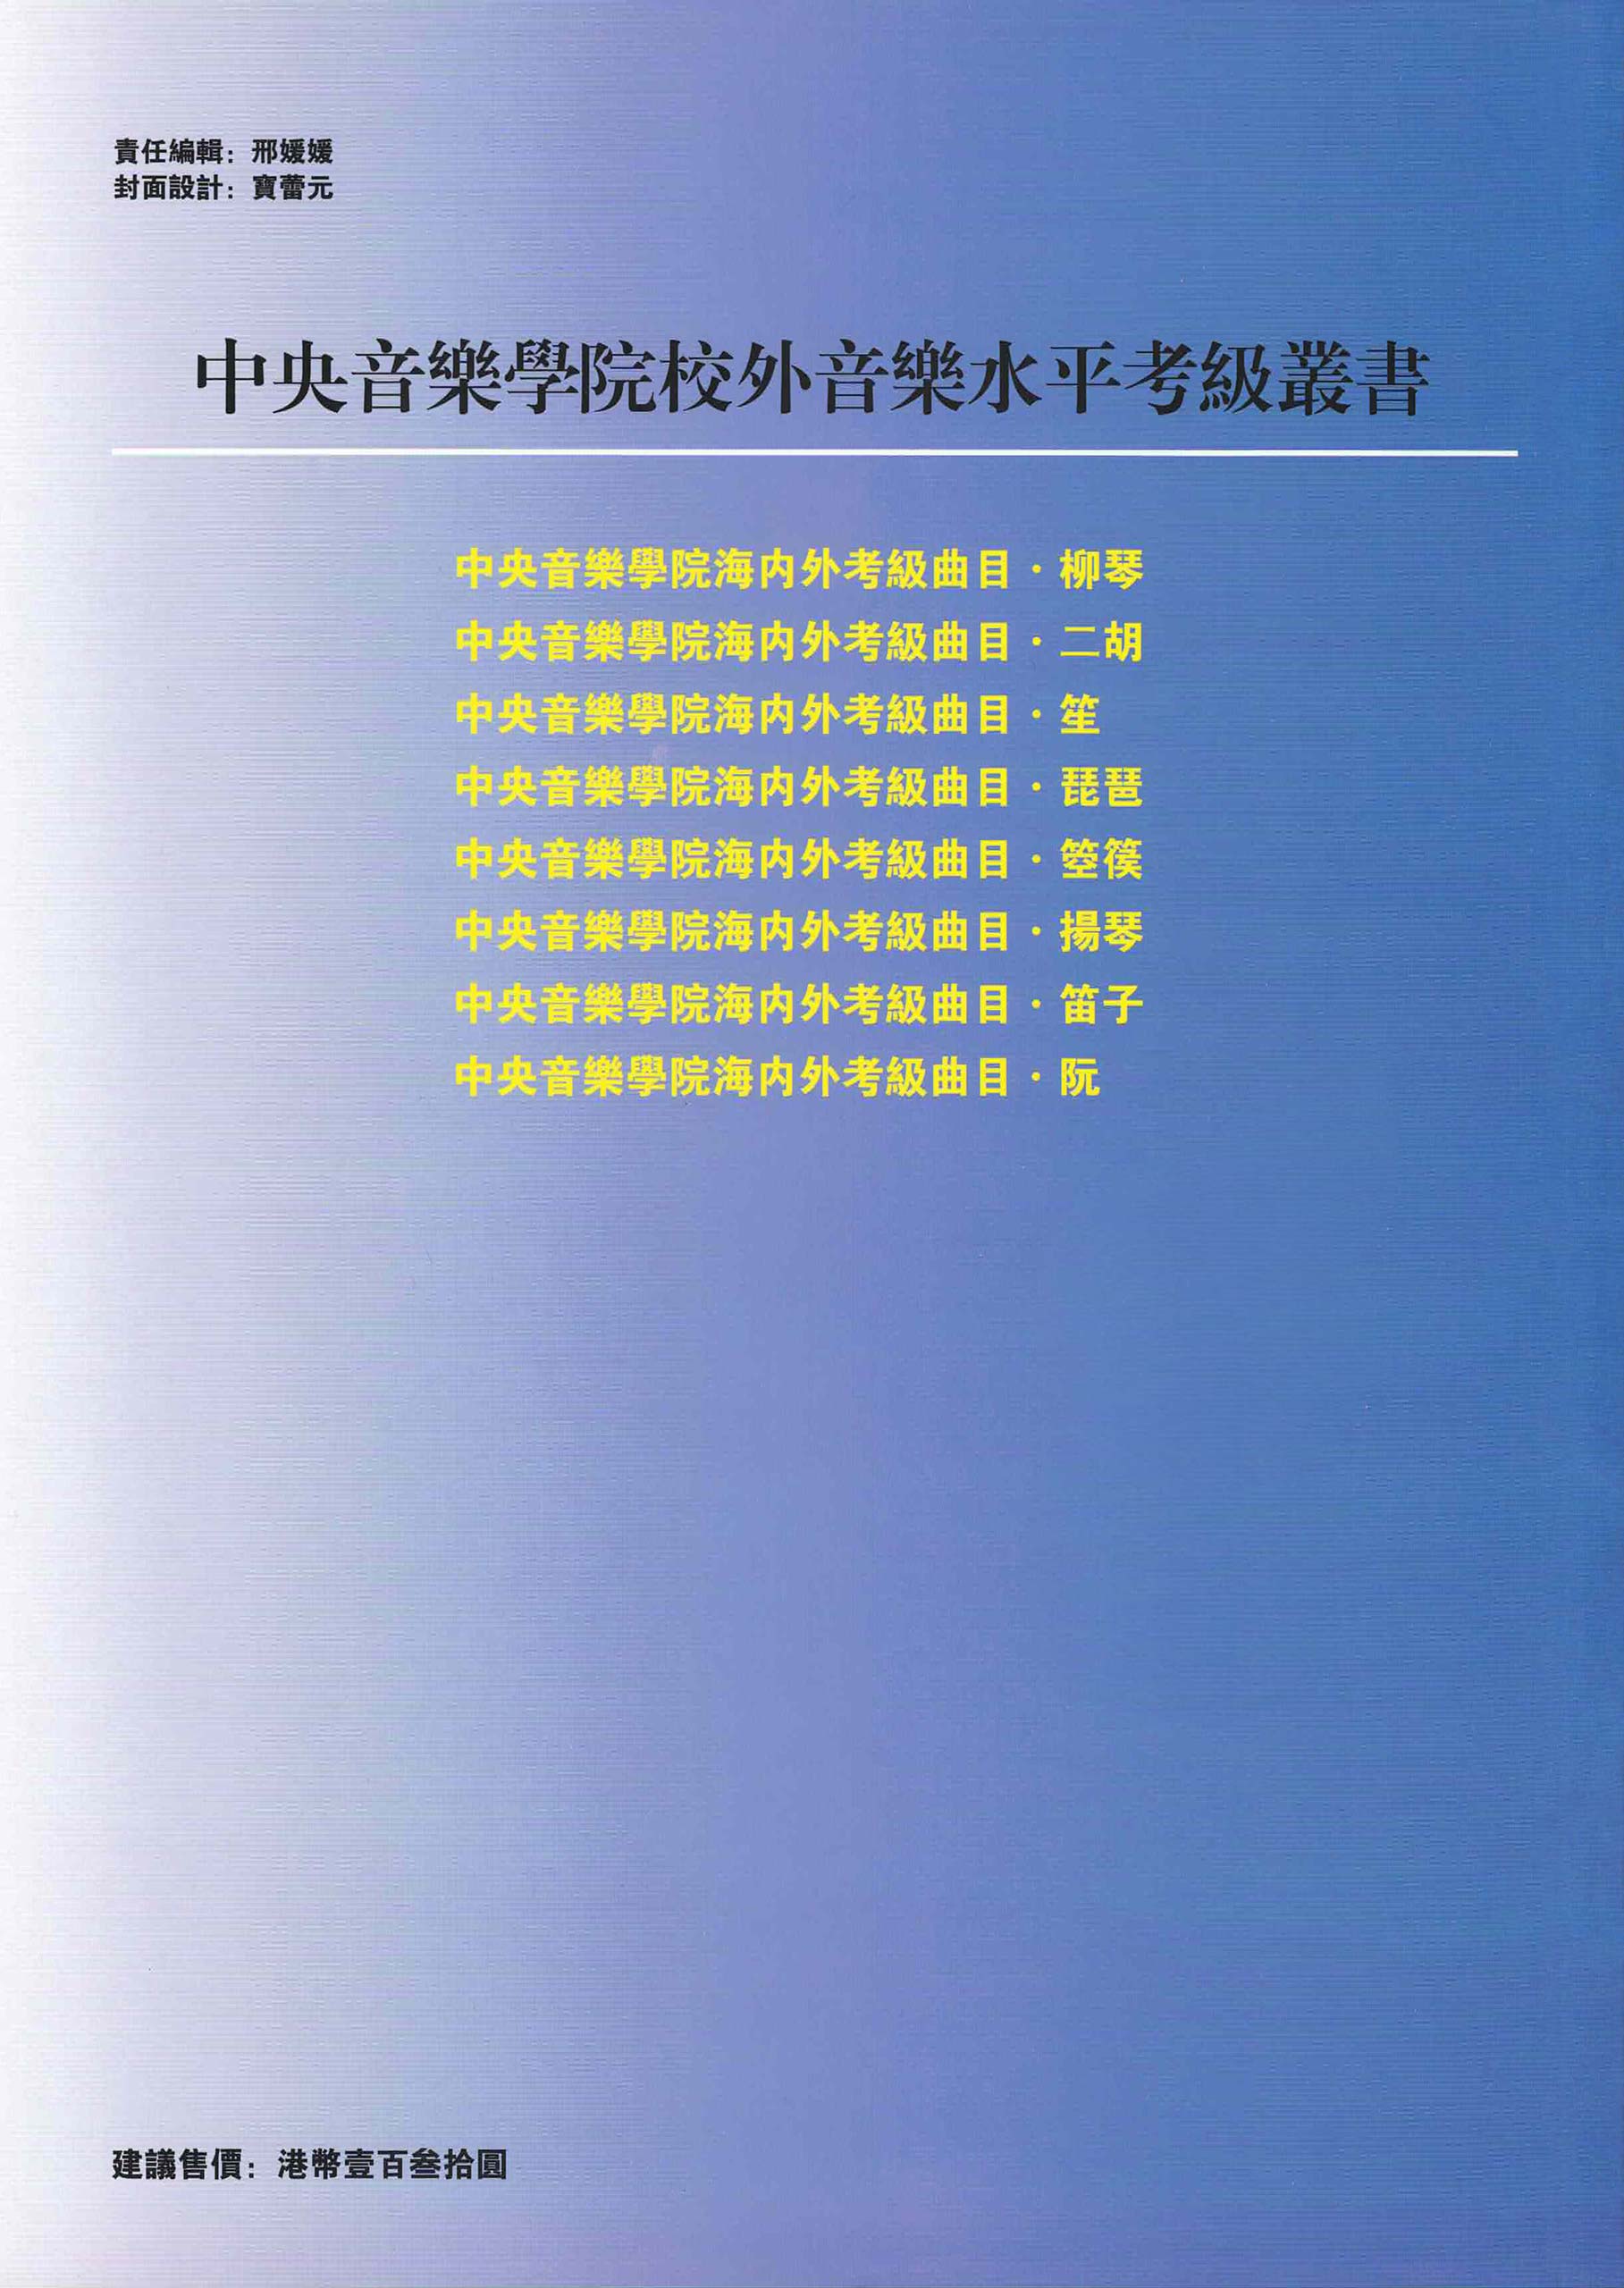 Liuqin Grading Examination Book by CCOM – NAFA (Beginner Grade 1-6) Back Cover